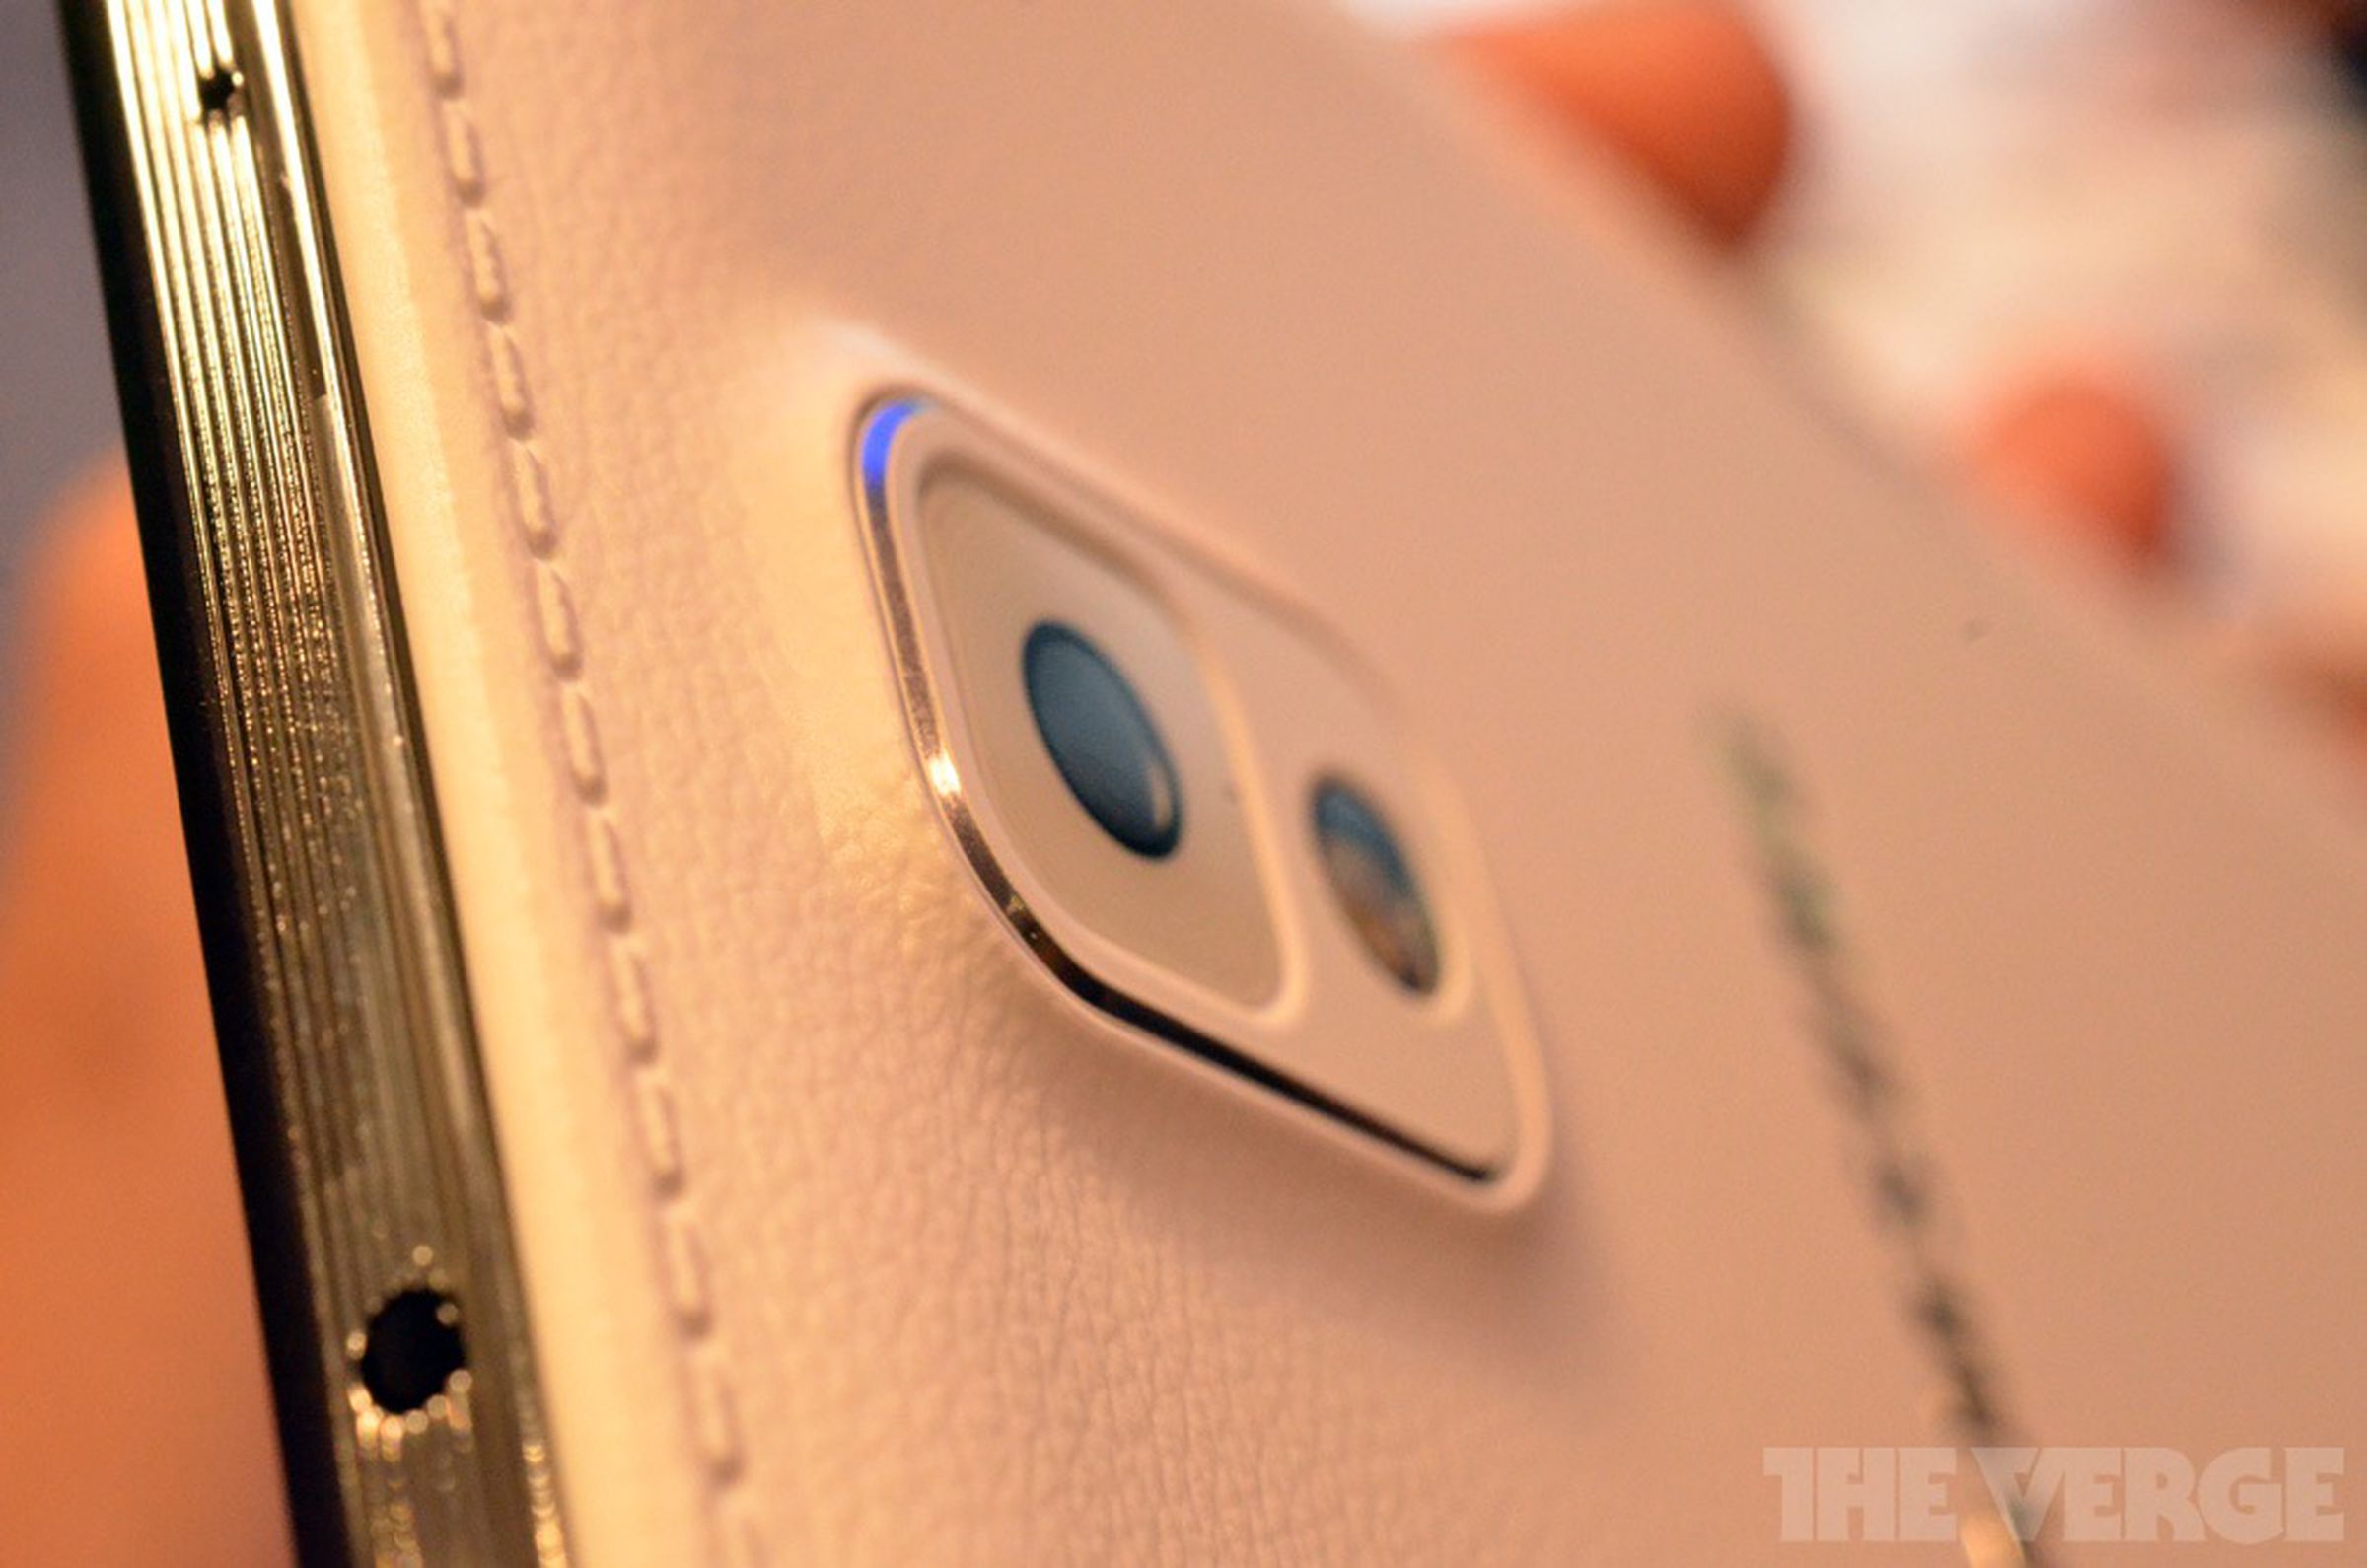 Samsung Galaxy Note 3 hands-on gallery